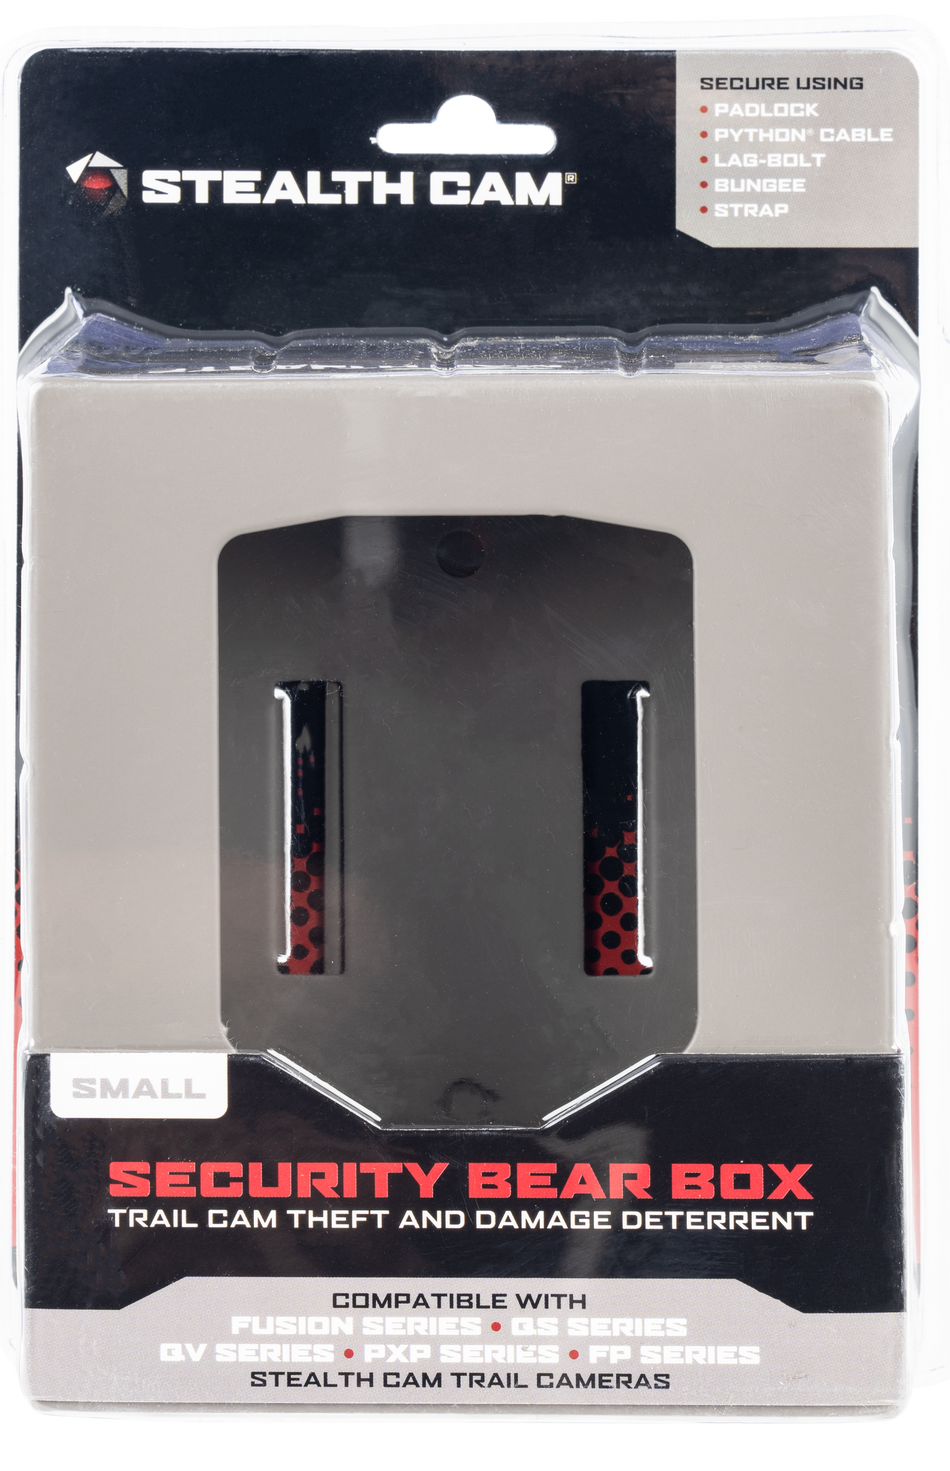 Stealth Cam Security / Bear Box, Steal Stc-bb-sm        Small Security Box Qs Qv Px